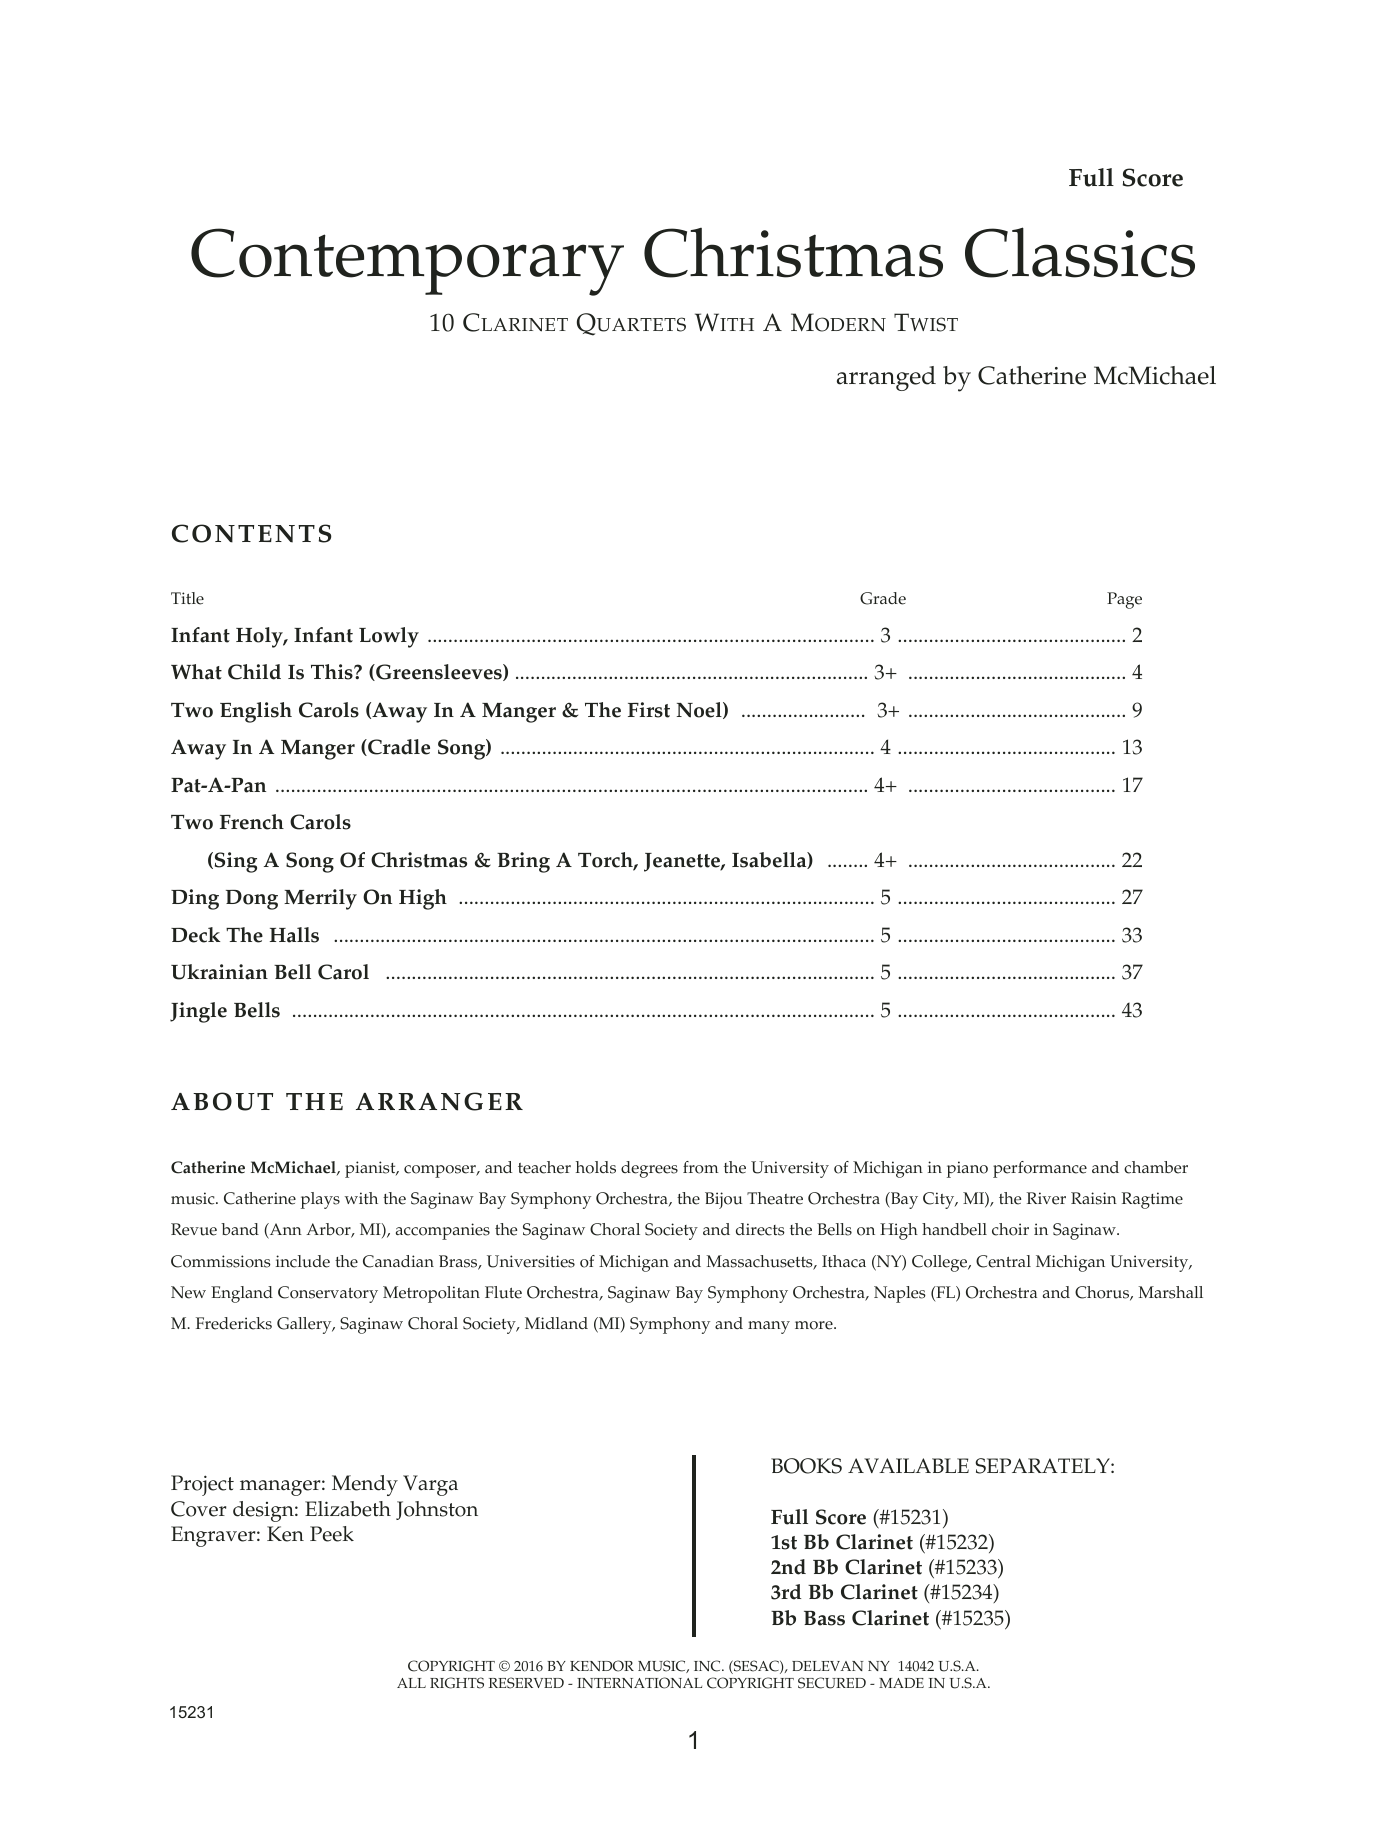 Contemporary Christmas Classics - Full Score (Woodwind Ensemble) von Catherine McMichael